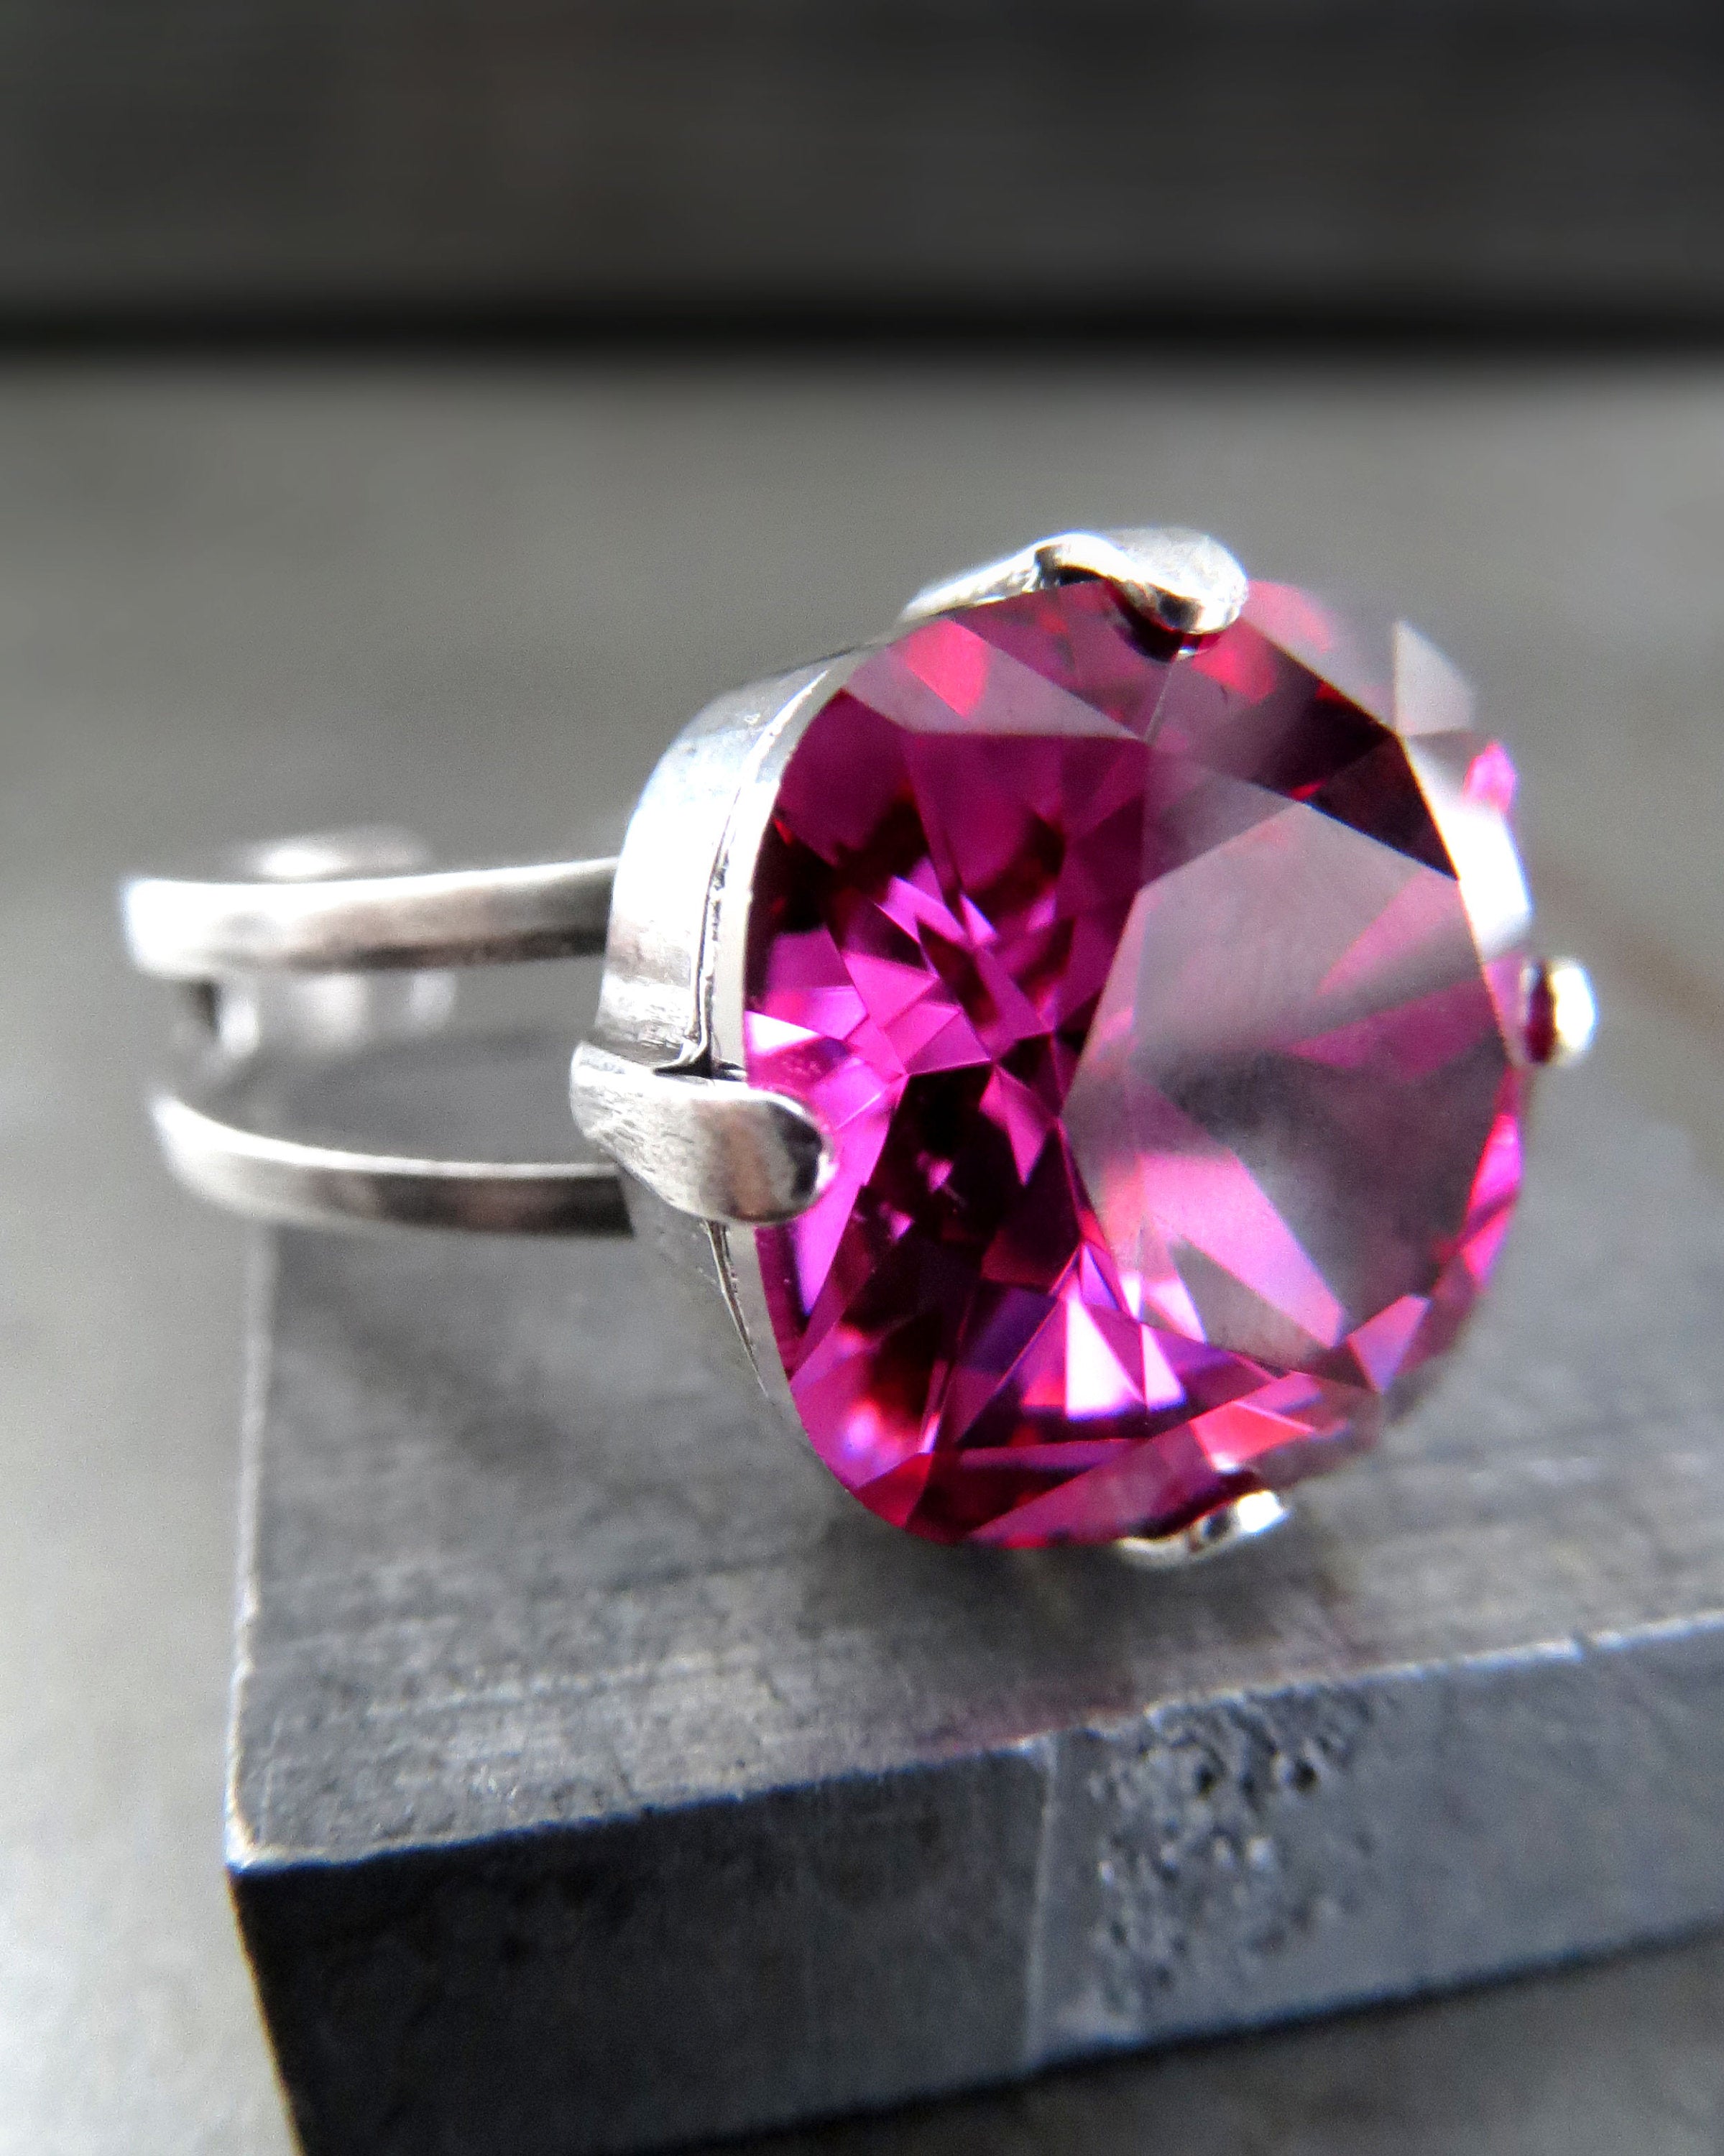 SWEET - Magenta Swarovski Crystal Ring, Fuchsia Cushion Cut Crystal, Antique Silver Adjustable Ring Band - Hot Pink Crystal Ring - Swar 4470